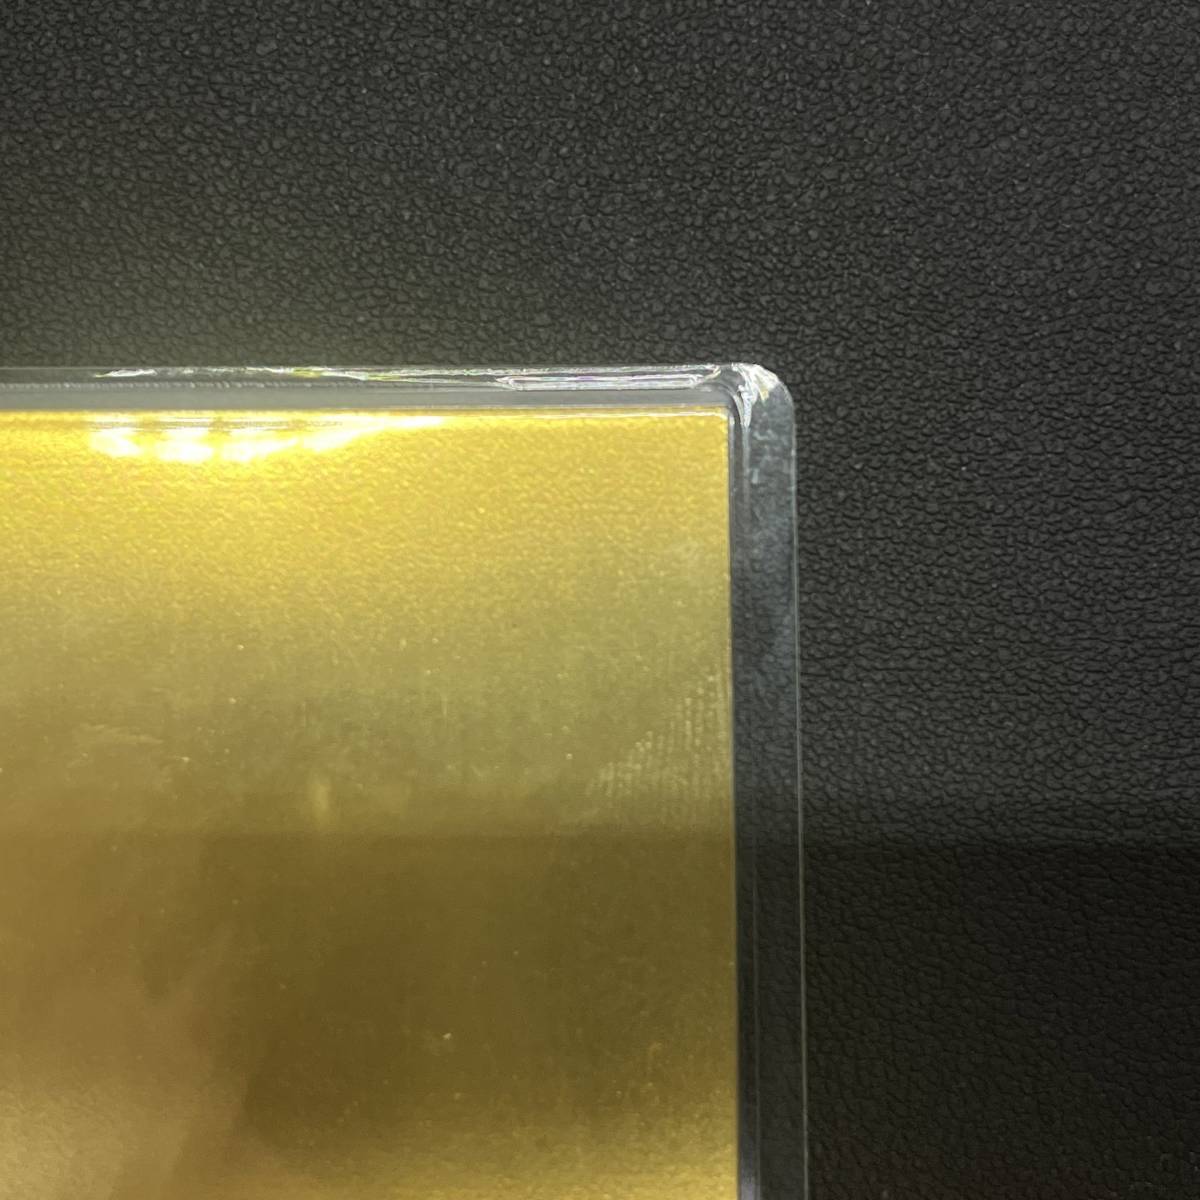 【DHS1533ST】三菱マテリアル 1 GRAM FINE GOLD 999.9 1グラム ゴールド フィルム カード 純金 貴金属 ラミネート_画像4